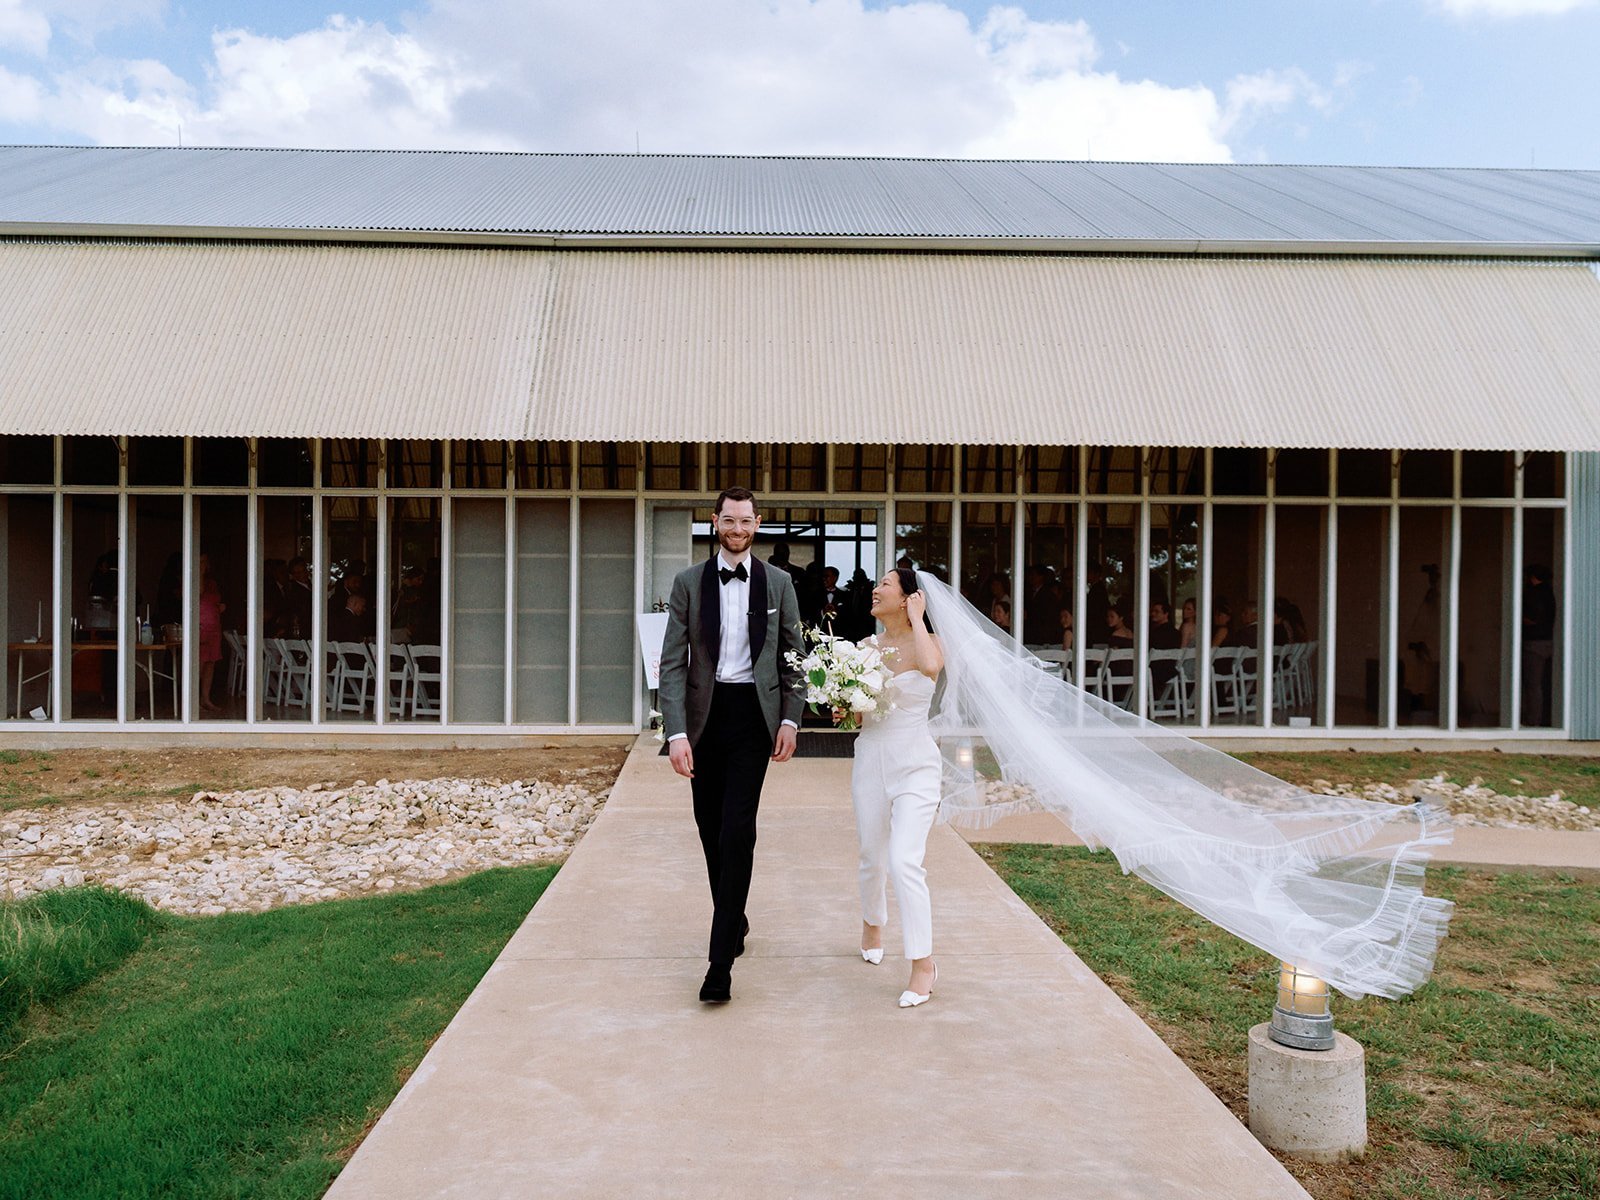 Best-Austin-Candid-Wedding-Photographers-Film-Documentary-35mm-Prospect-House-76.jpg